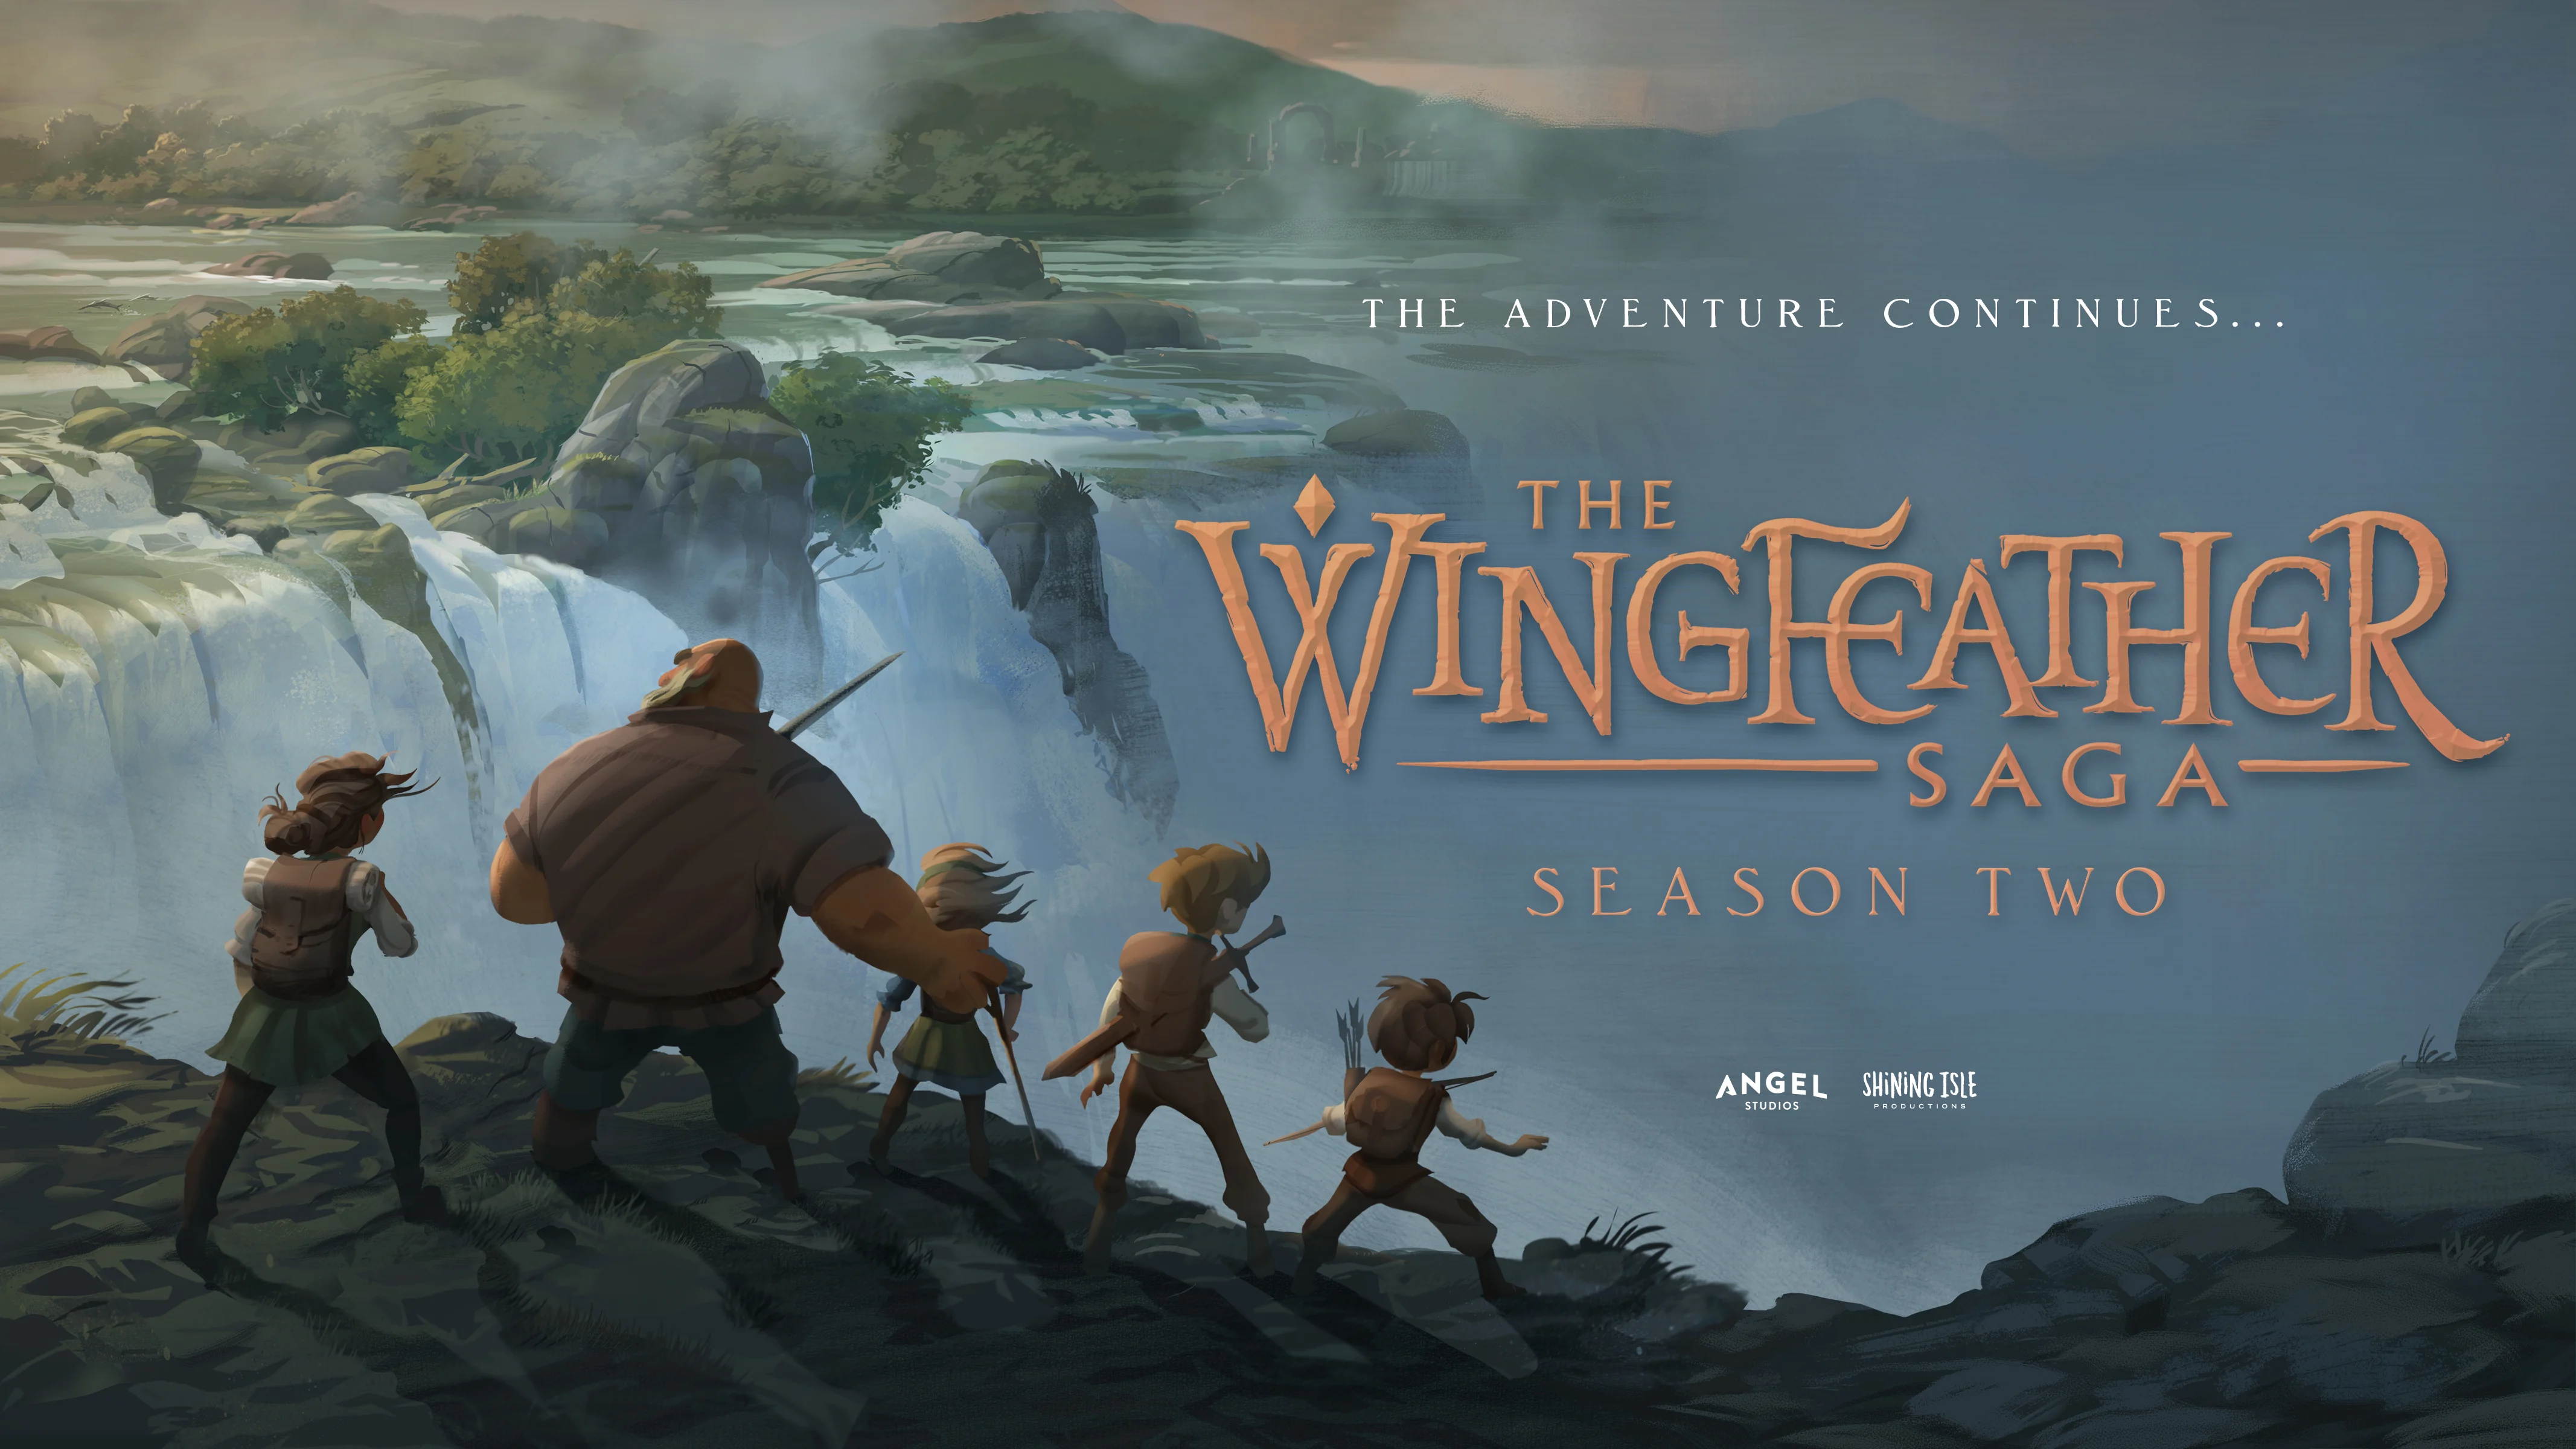 Image of The Wingfeather Saga Season 2 Poster